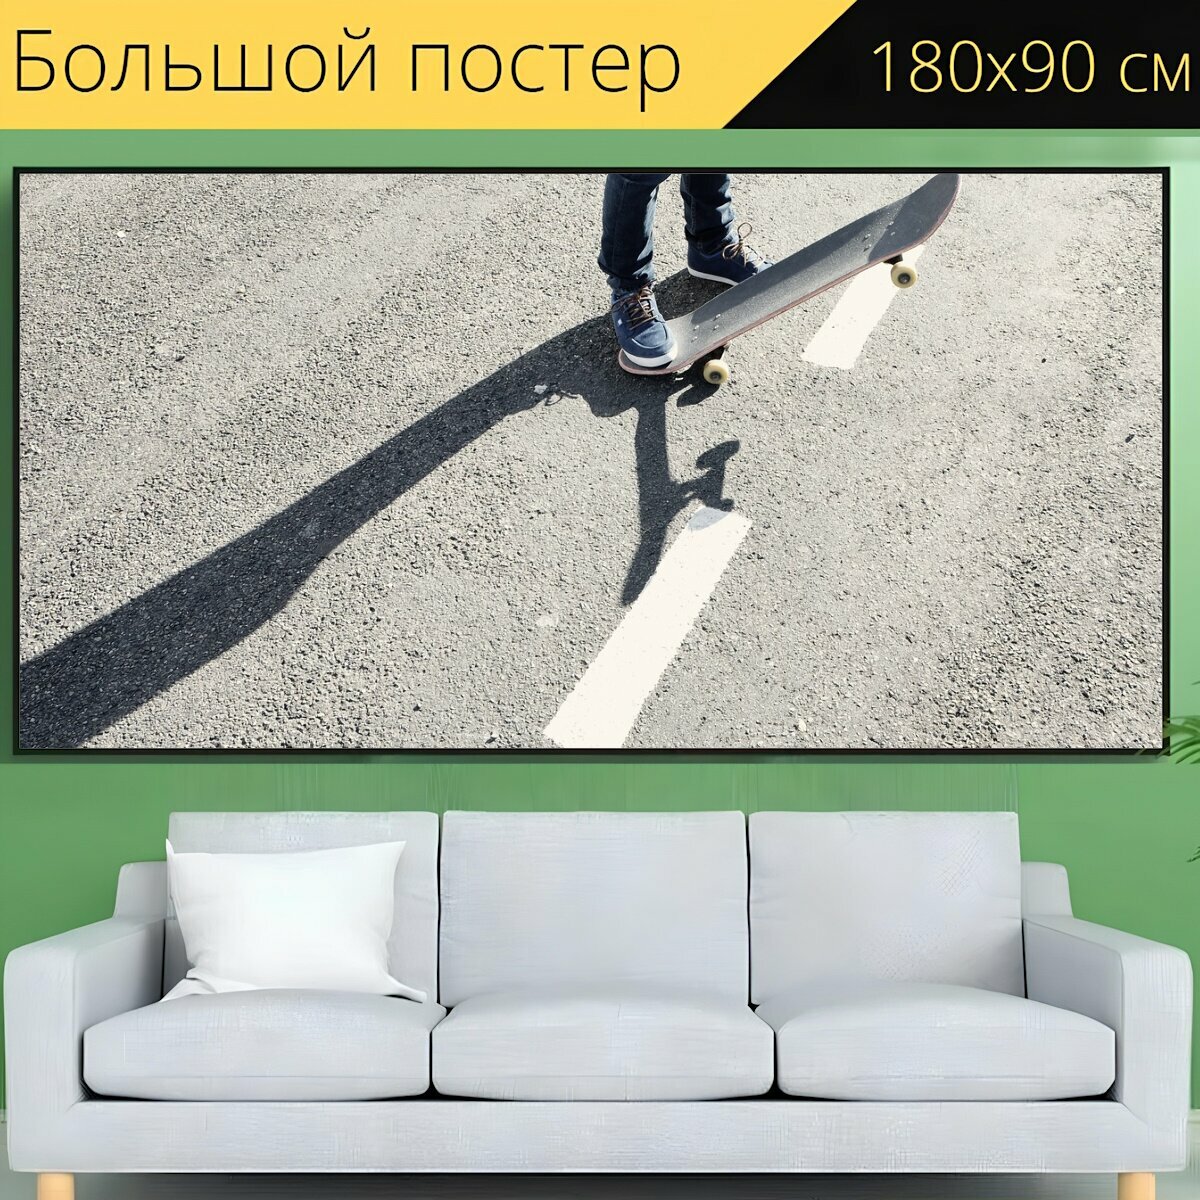 Большой постер "Скейтборд, конькобежец, тротуар" 180 x 90 см. для интерьера